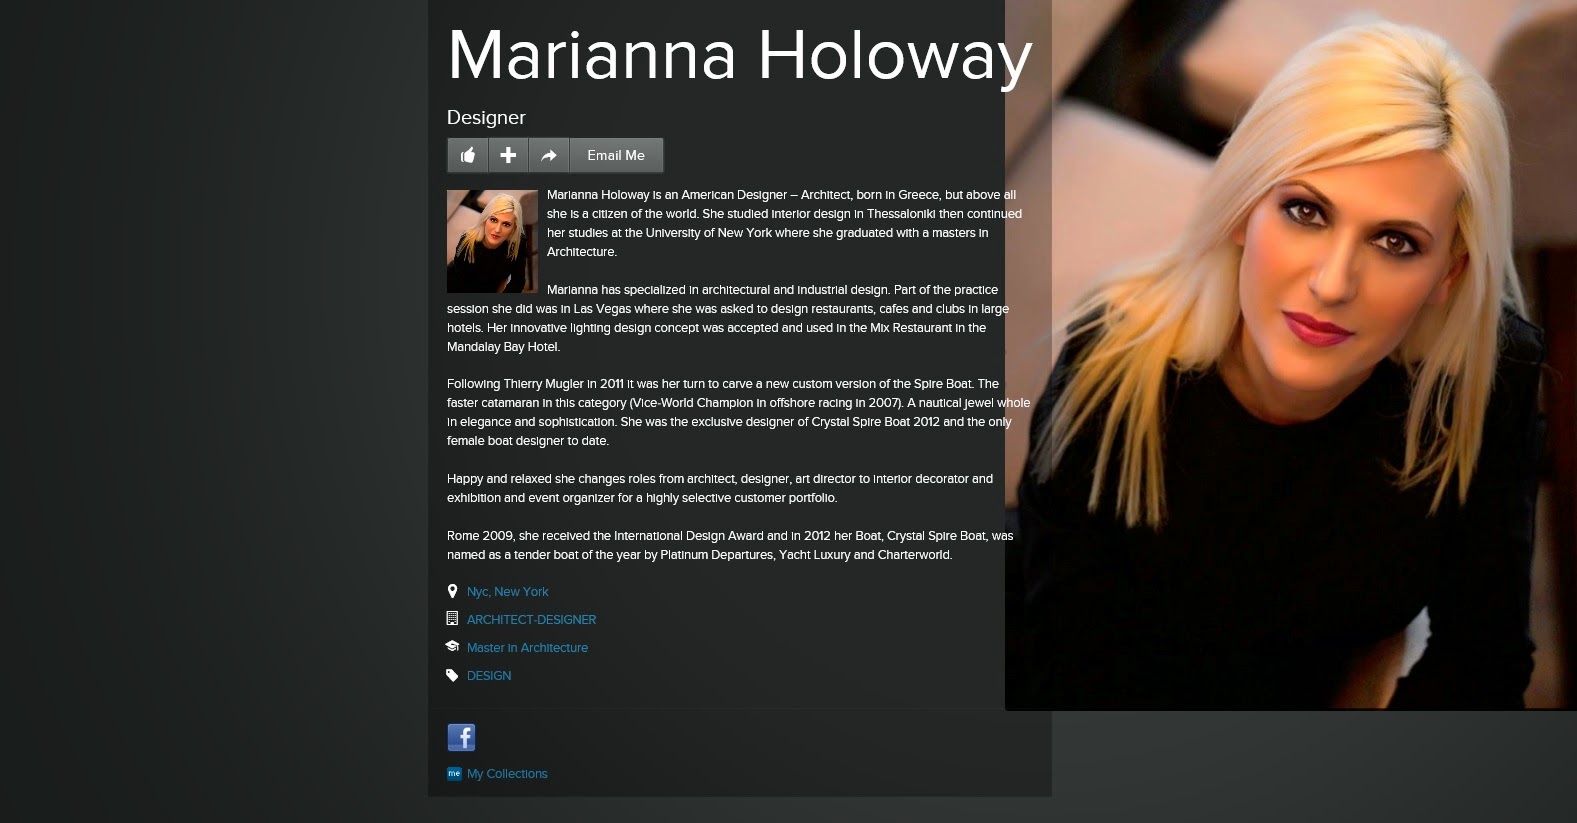 An image of Marianna Holoway, Architect & Designer